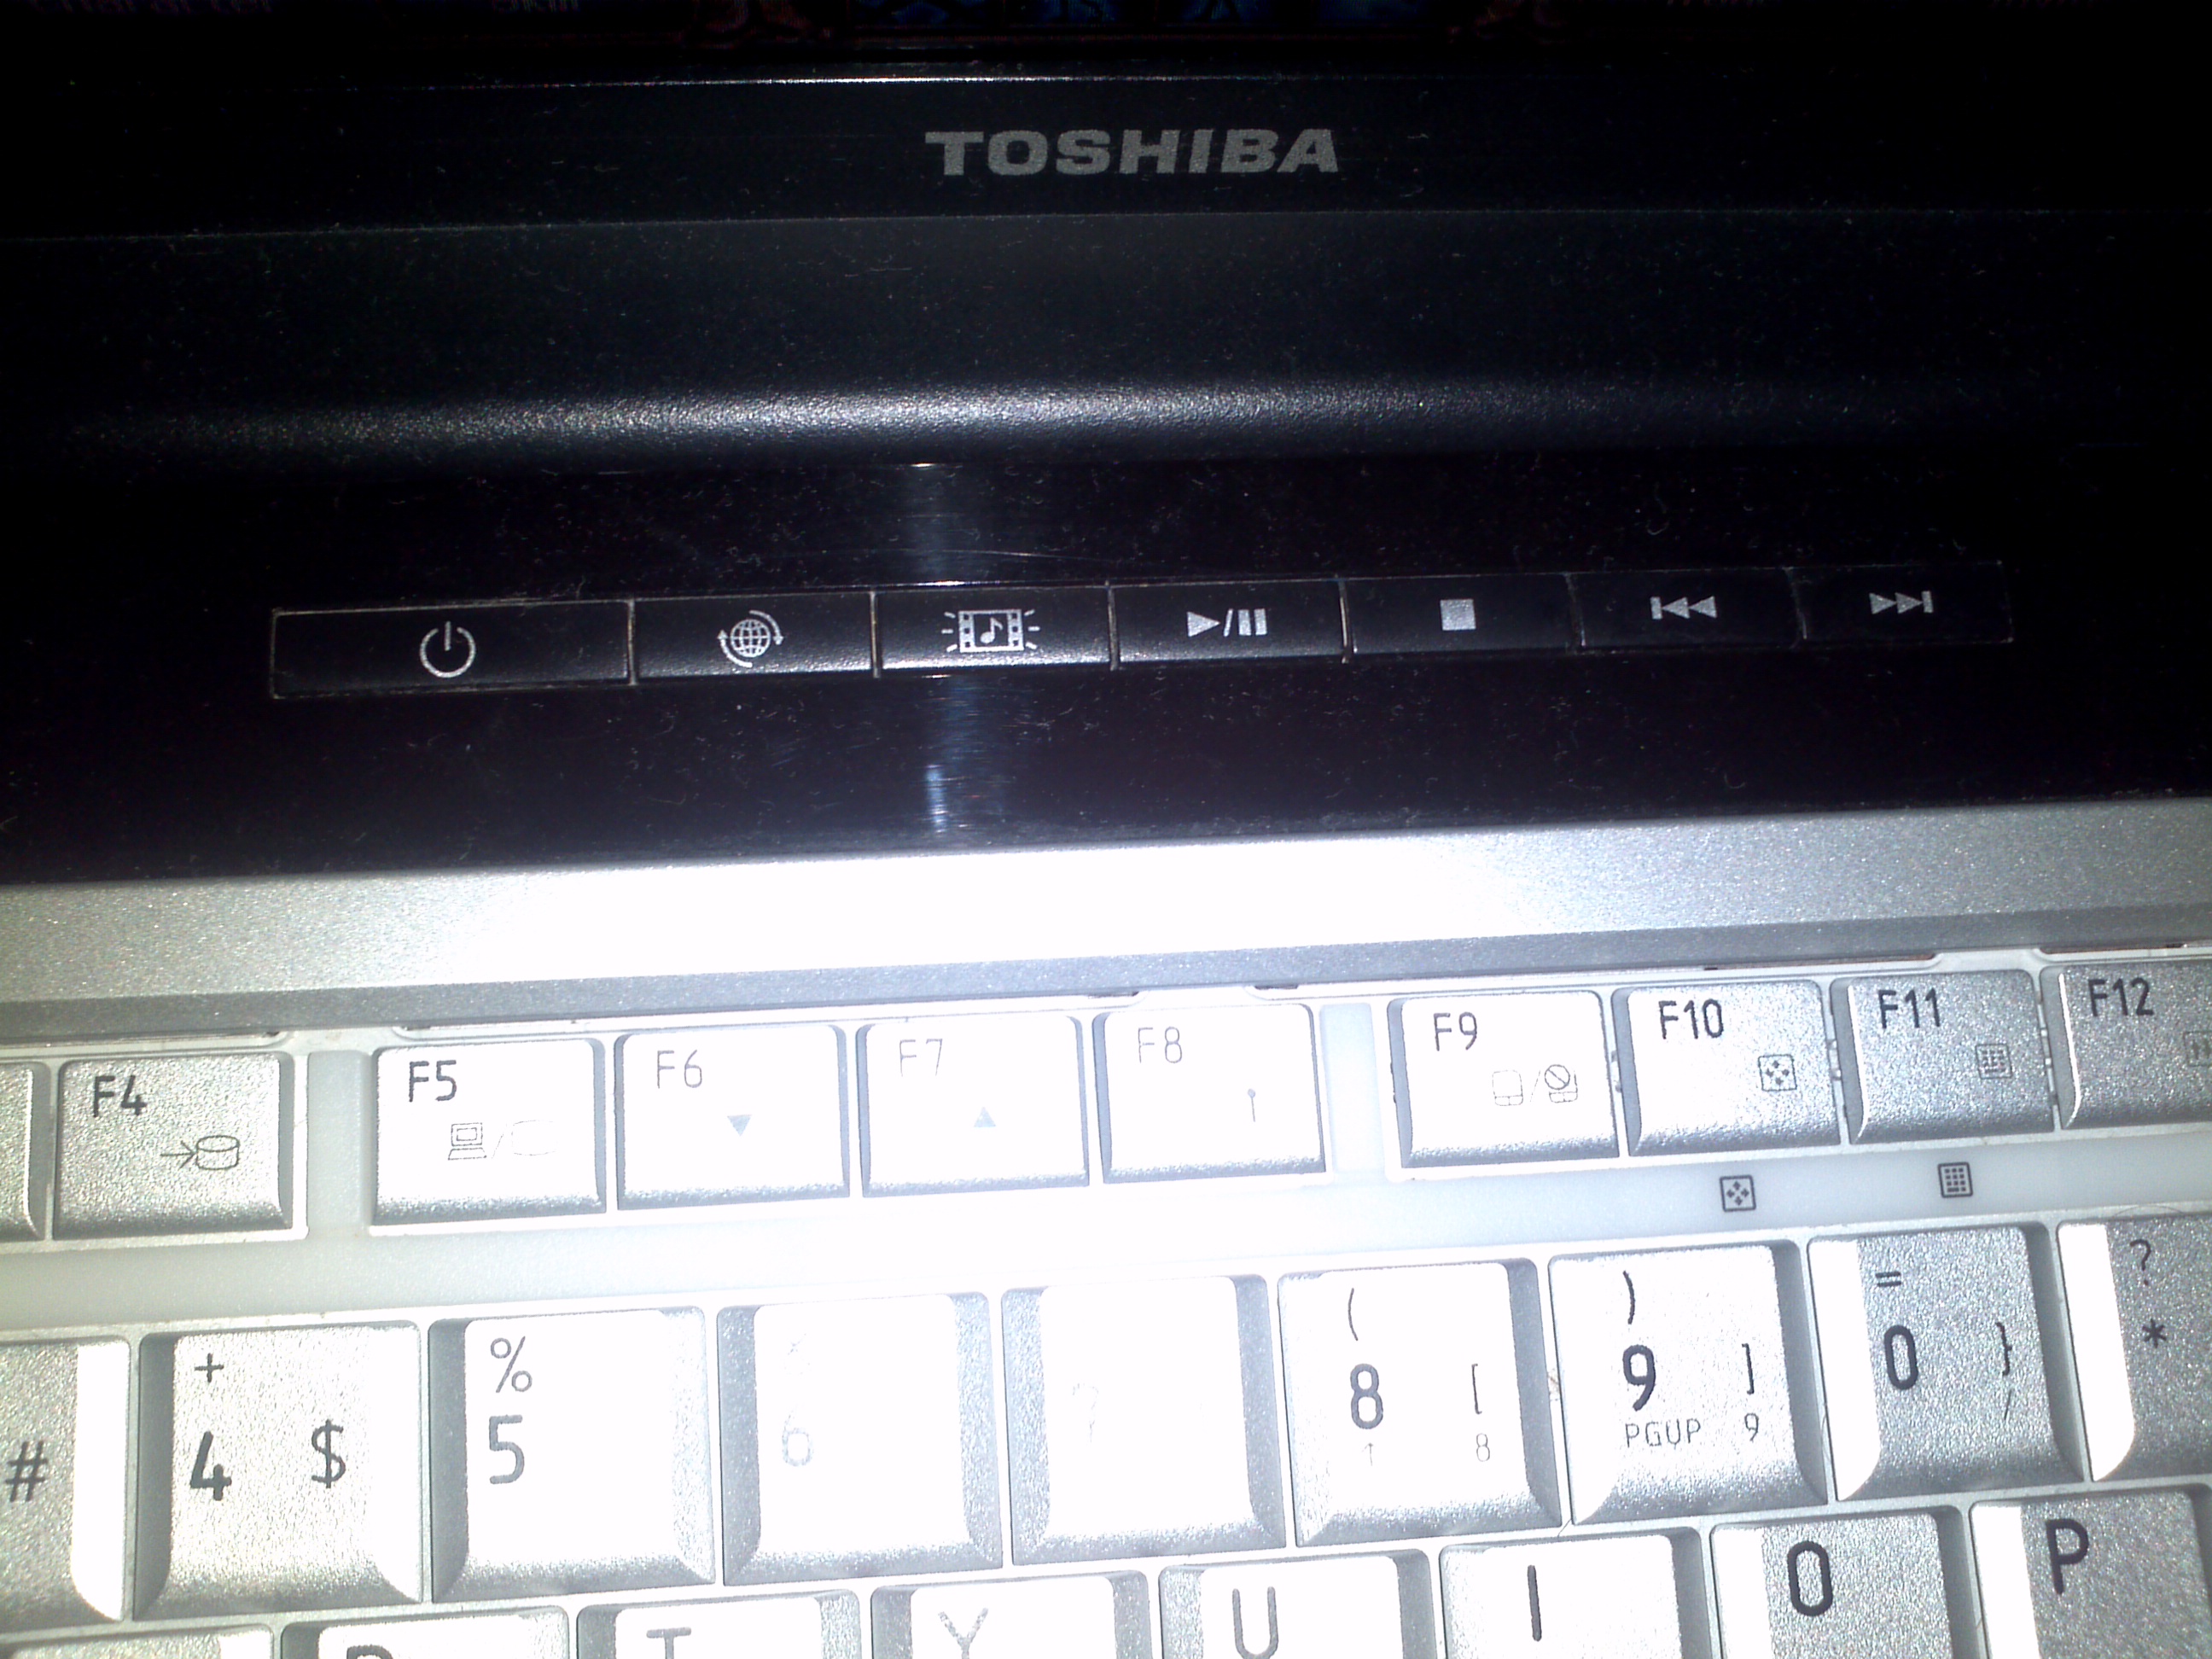  Toshiba A200 23U bu tuşları nasıl çalıştırabilirim (SSli)